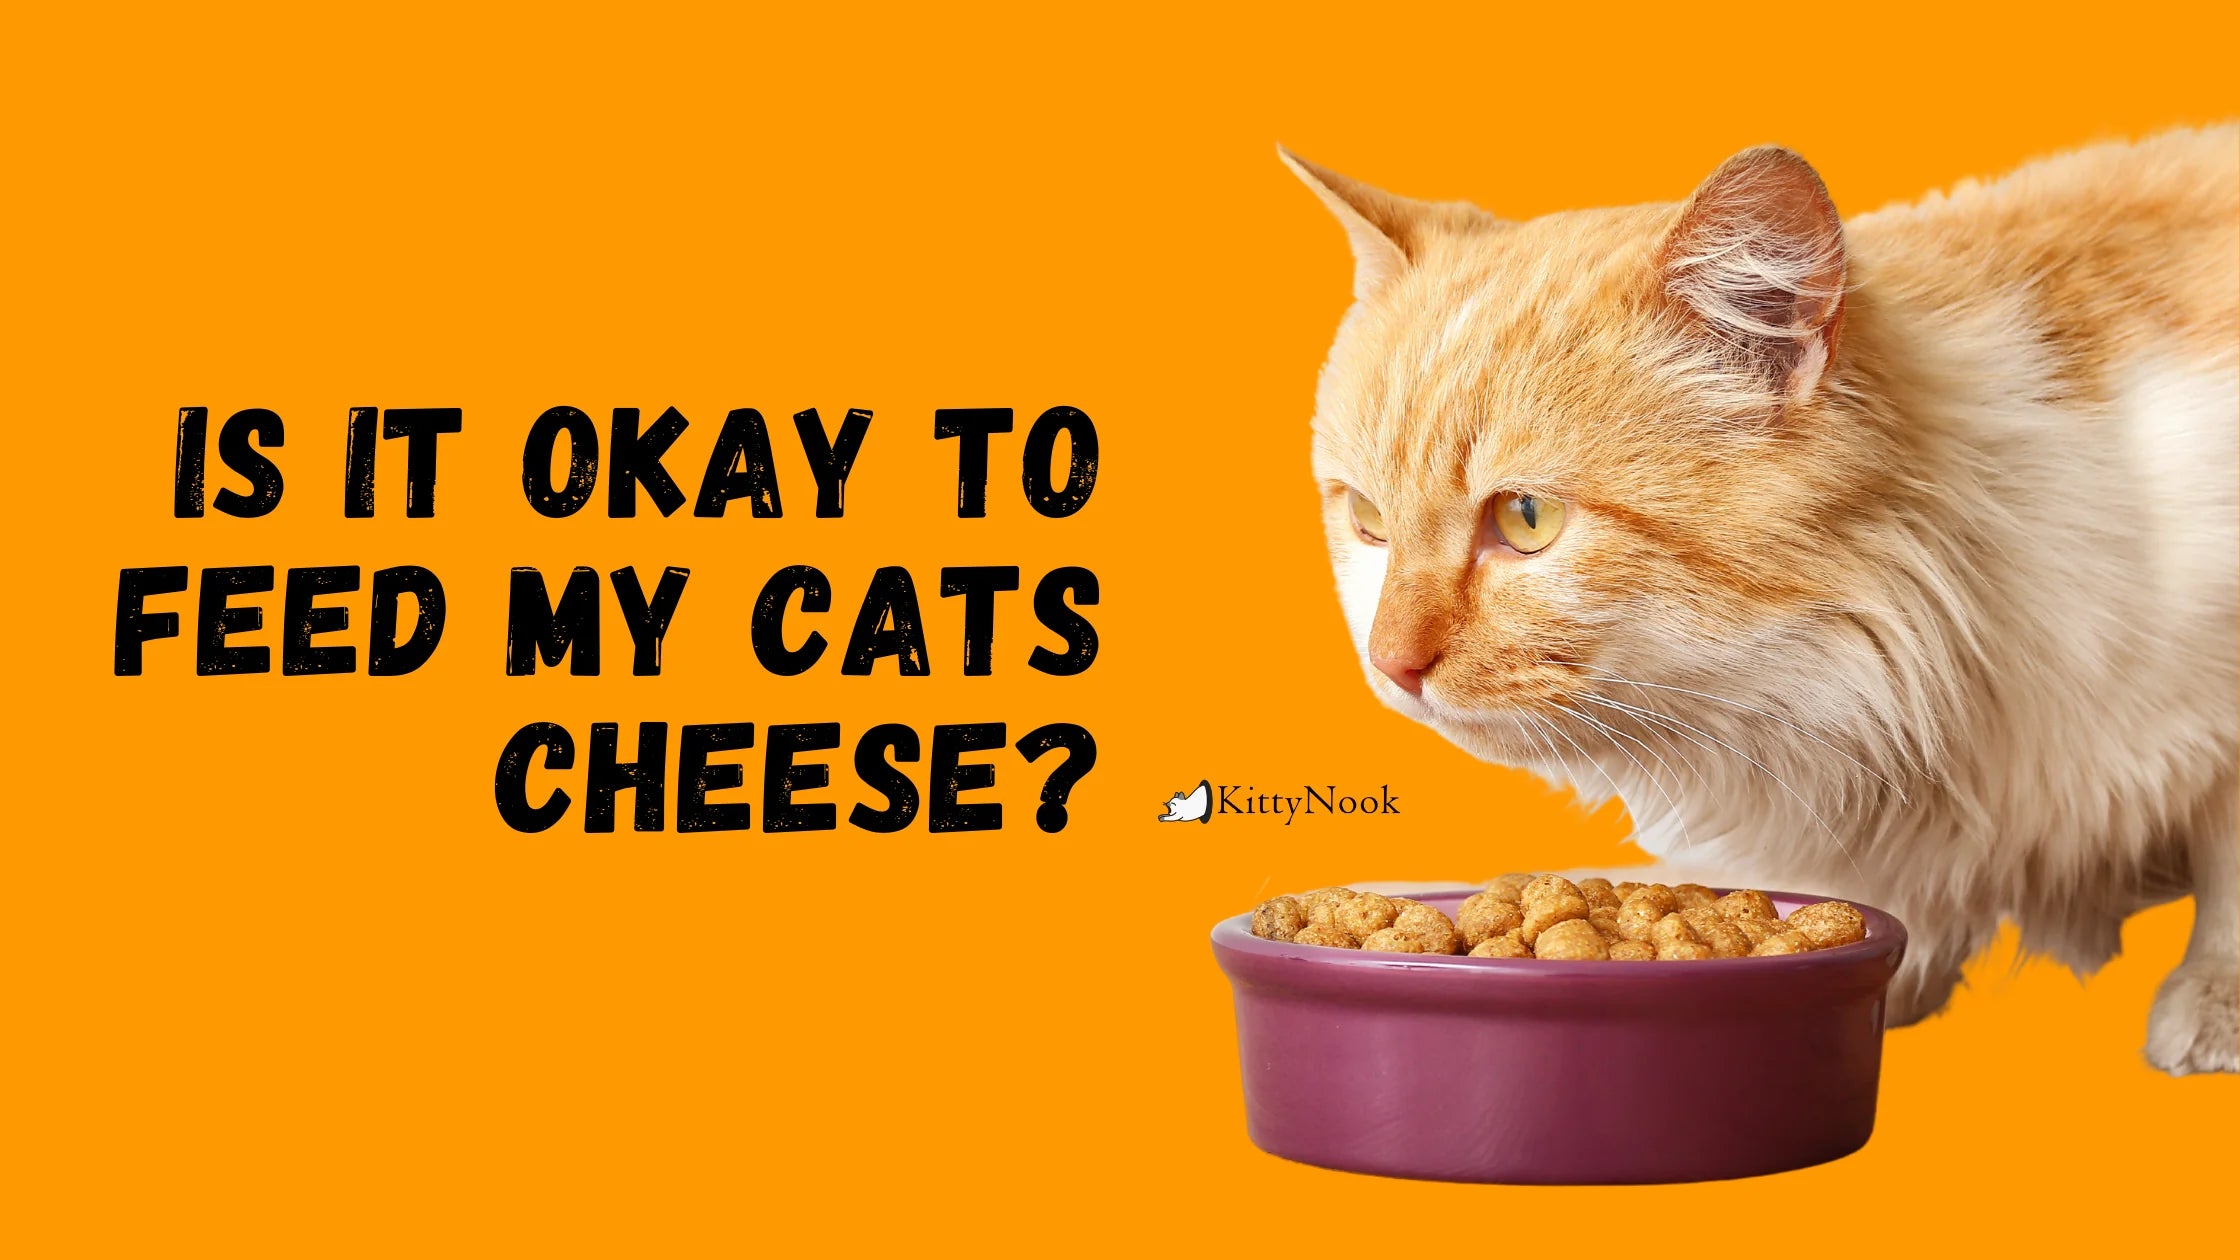 Is It Okay to Feed My Cats Cheese? - KittyNook Cat Company